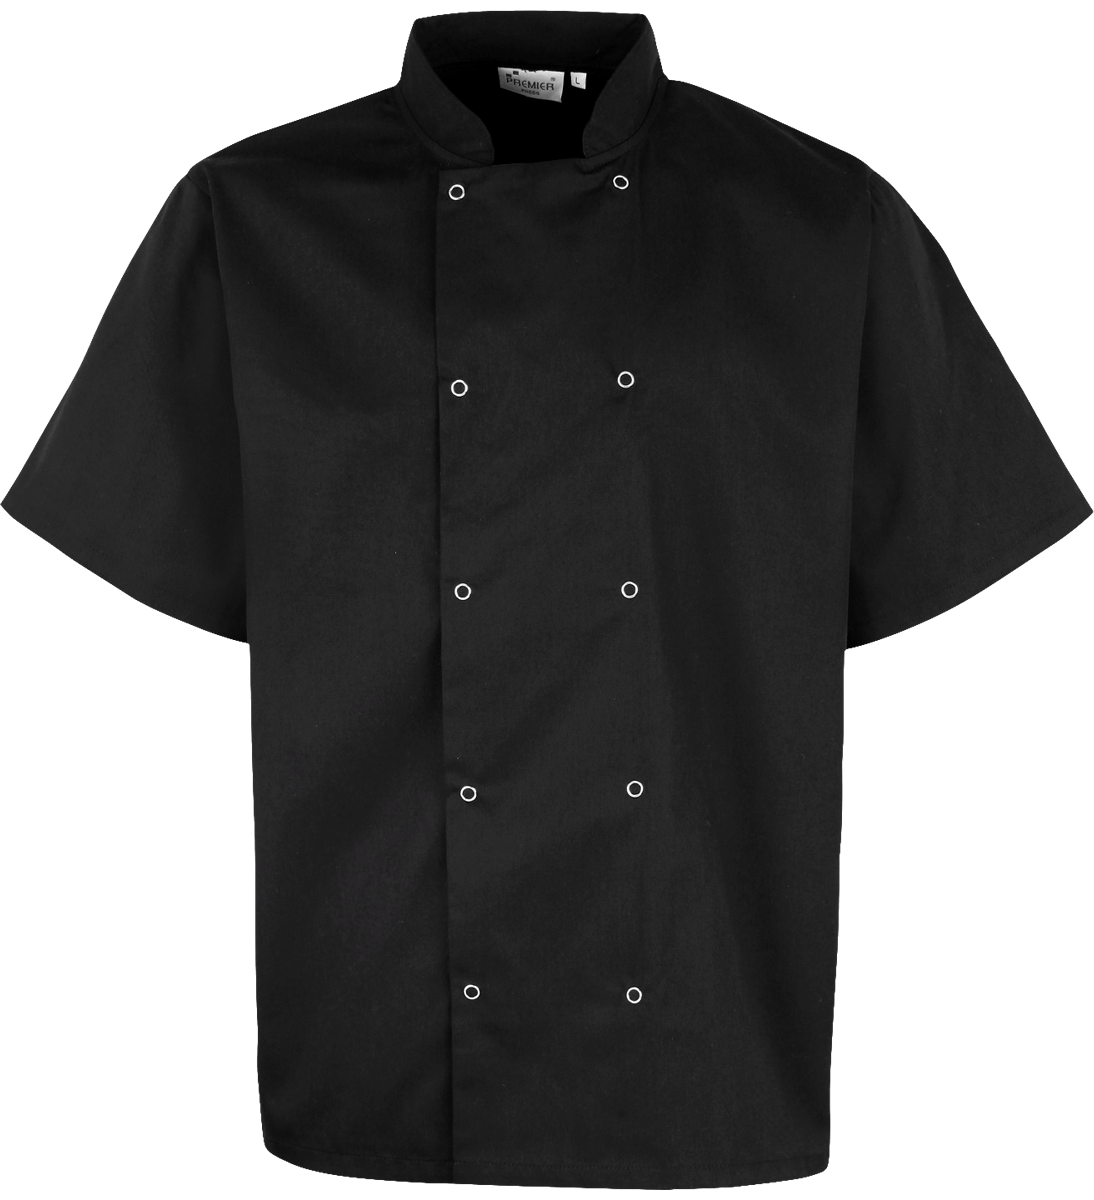 Personalised Chef's Jacket Short Sleeve Black